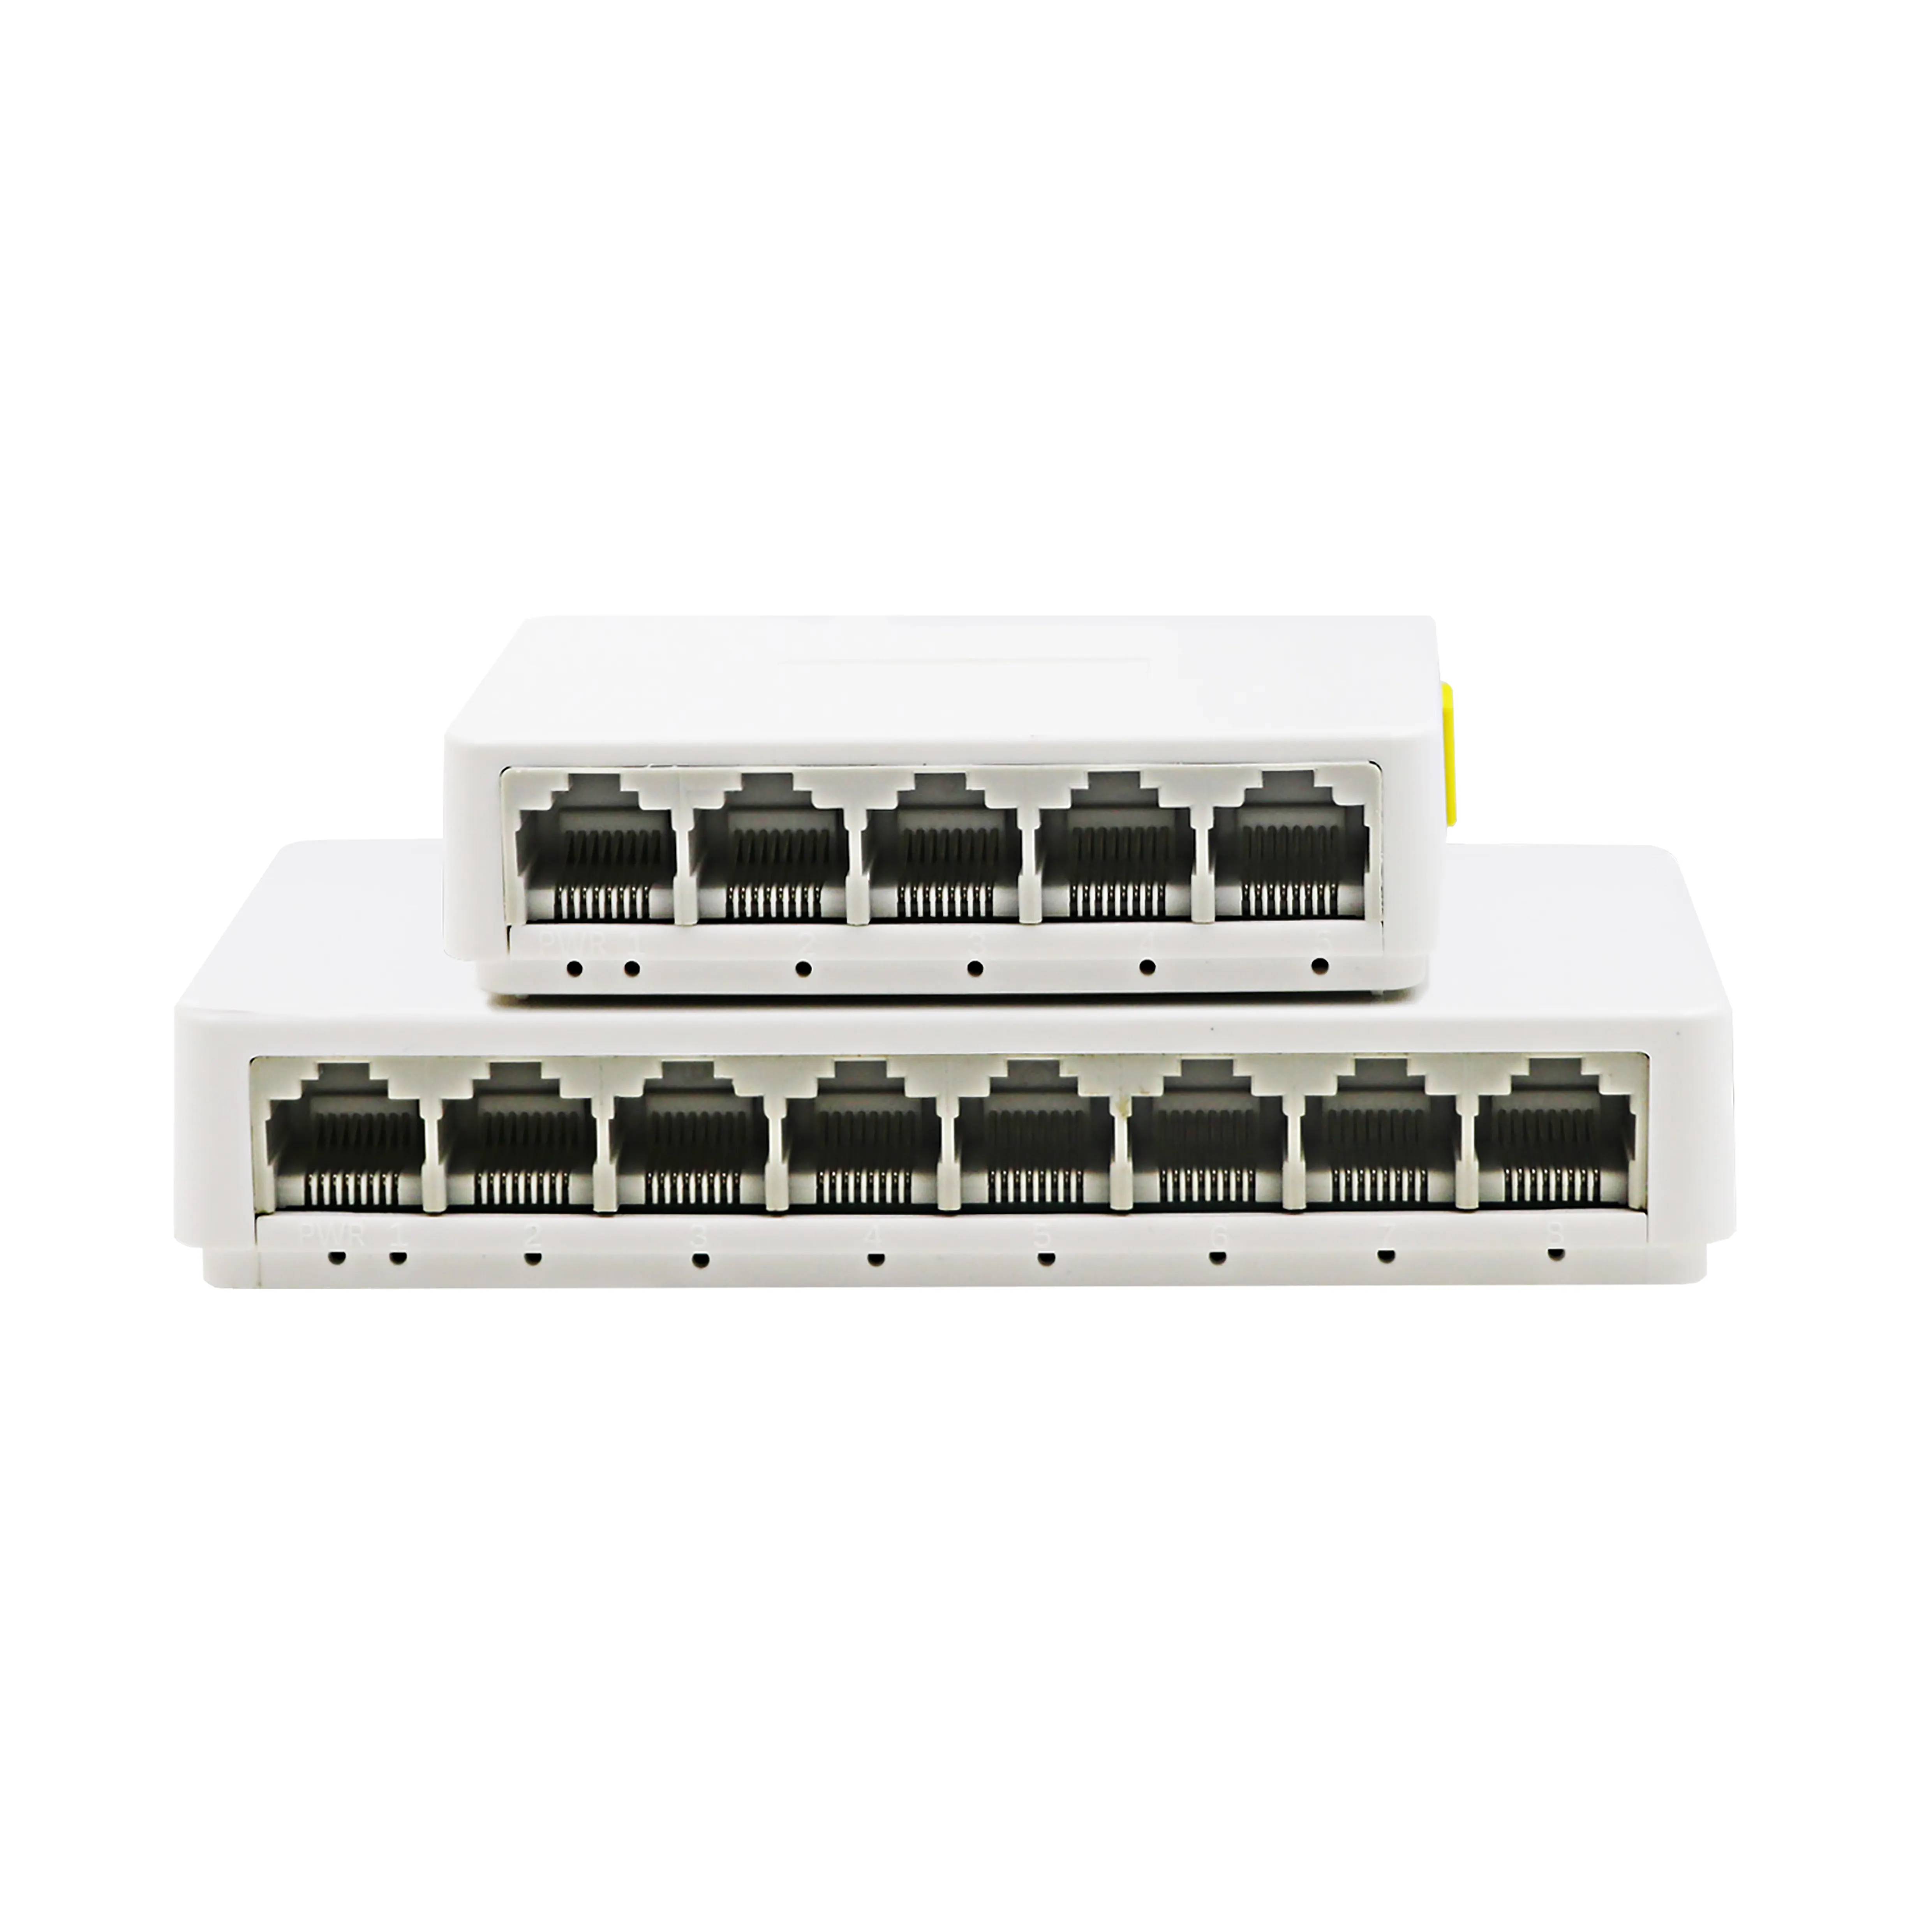 Fanless Hub Transition 1000Mbps Gigabit Smart Home 8-port Unmanaged 10 100 1000m Ethernet Industrial 8 Port Network Switches